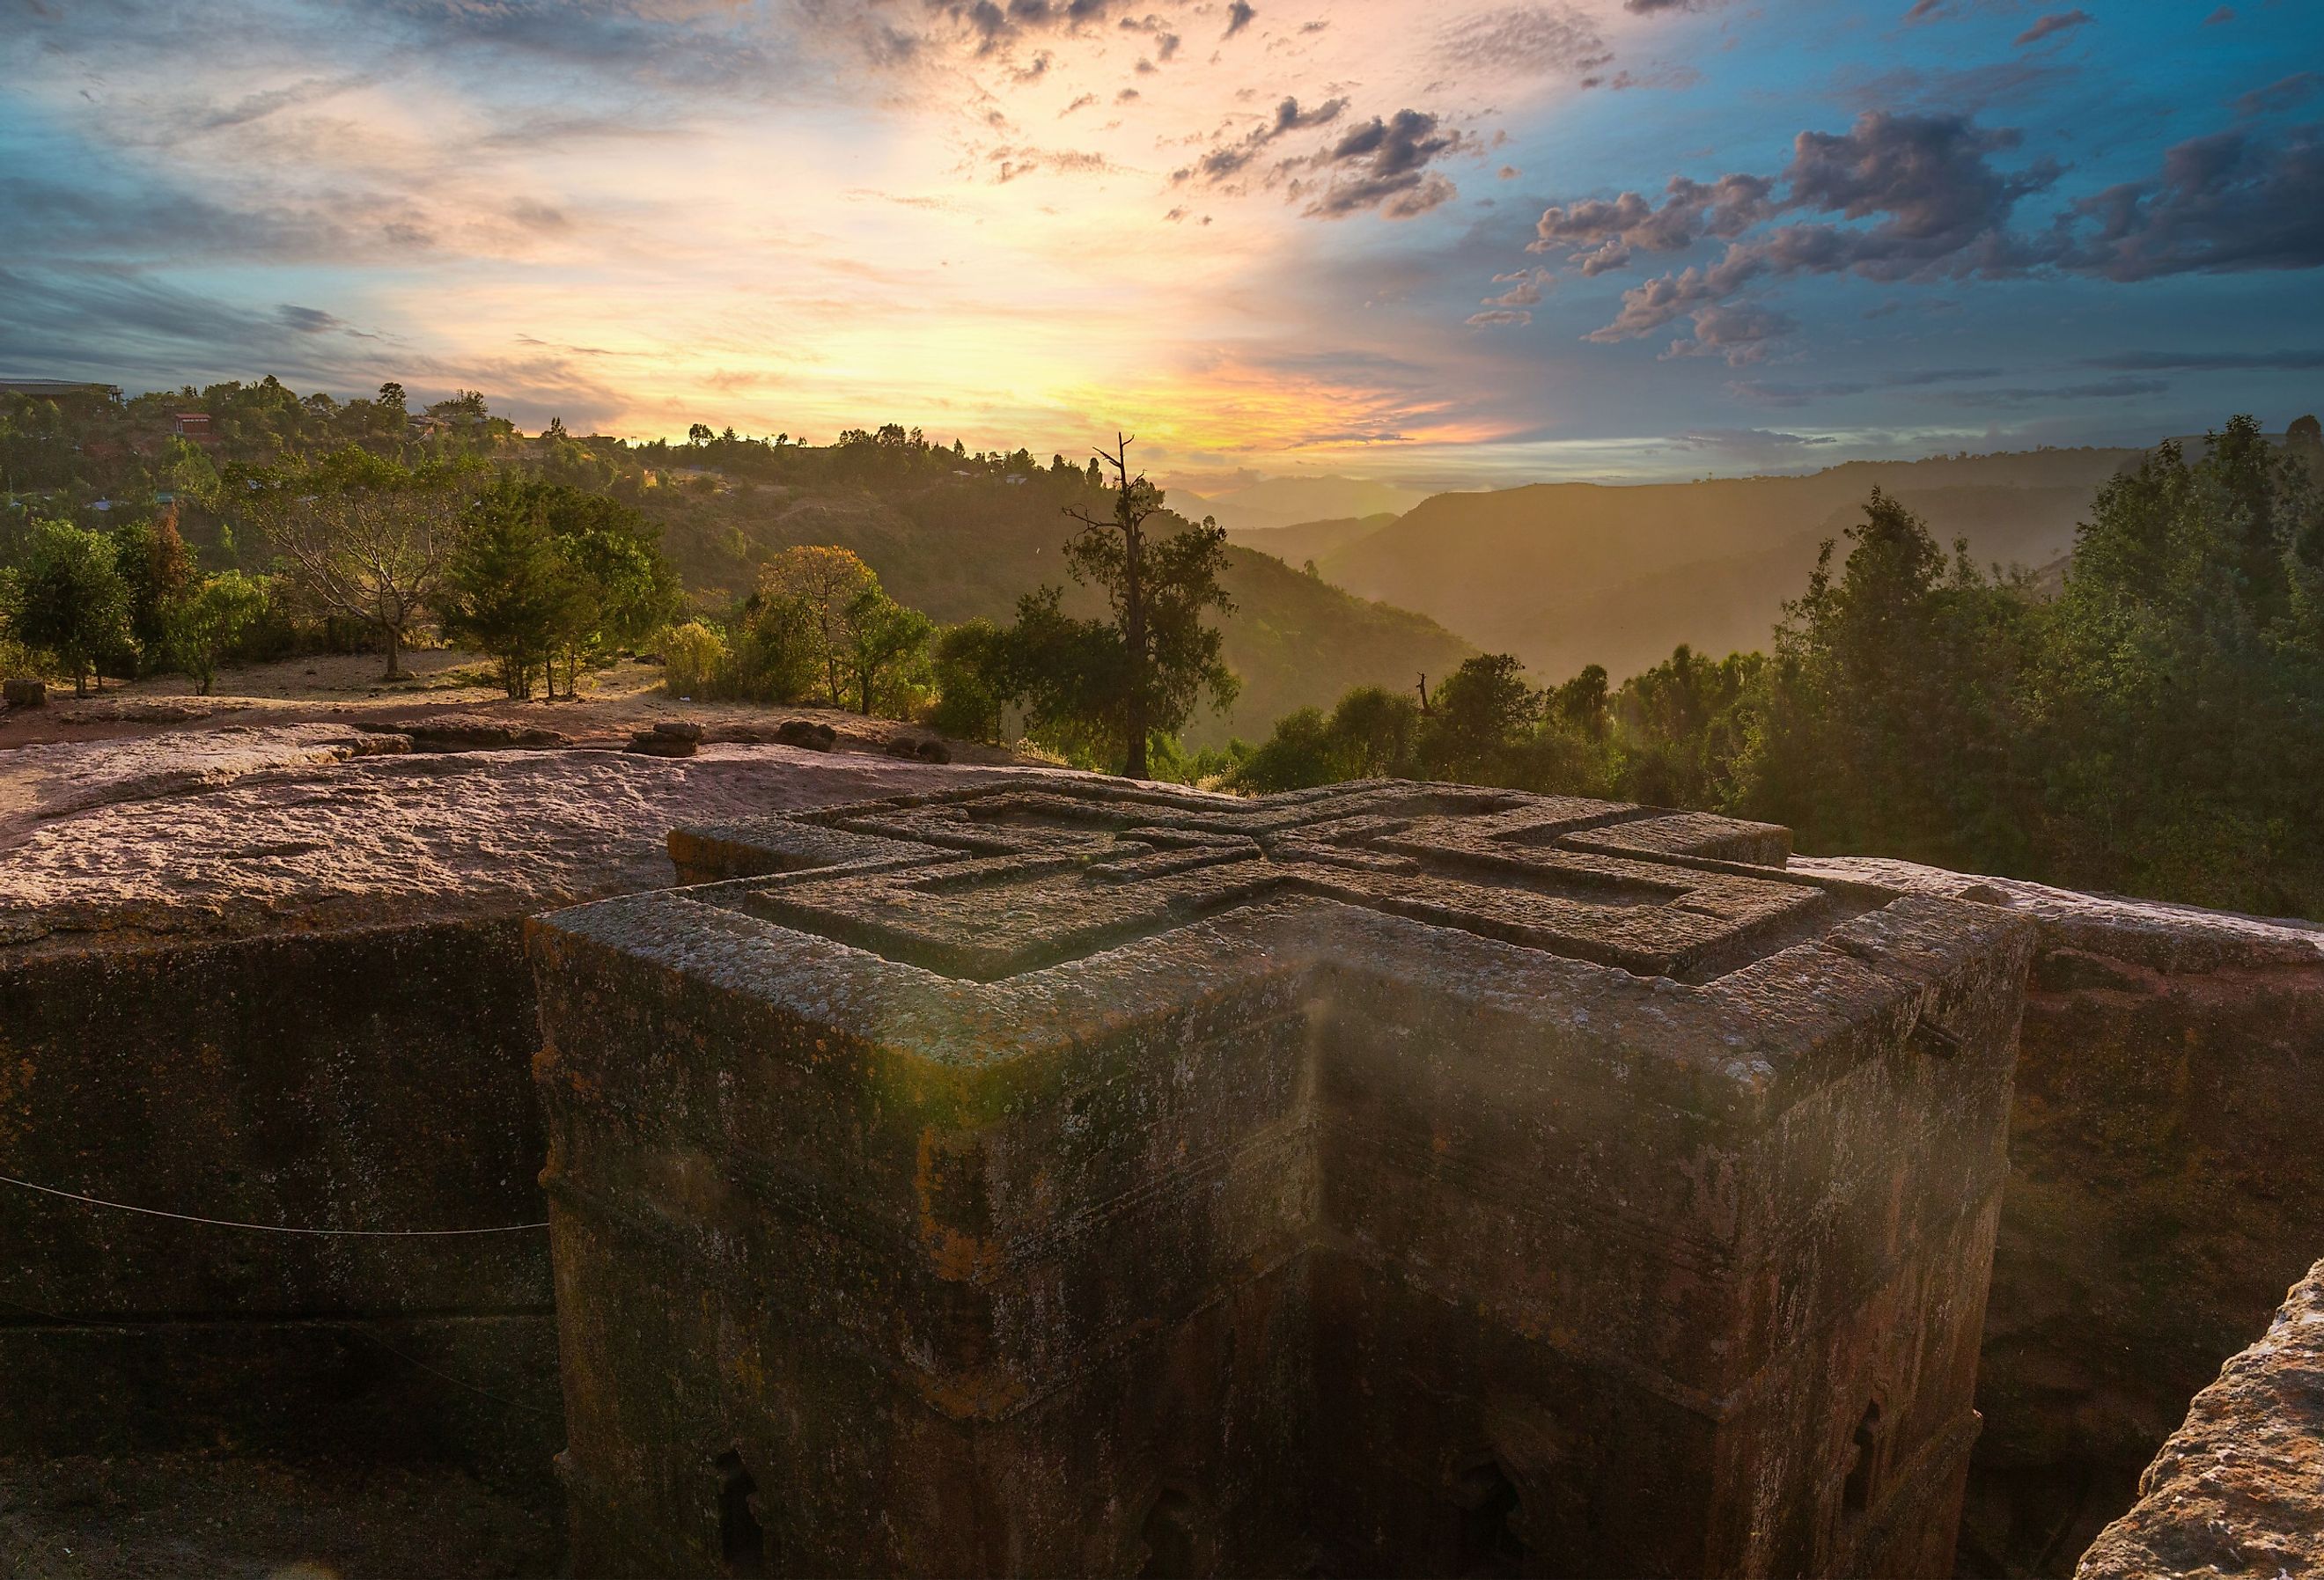 Sunset at the monolithic church of Saint George, Ethiopia. Image credit Framalicious via Shutterstock